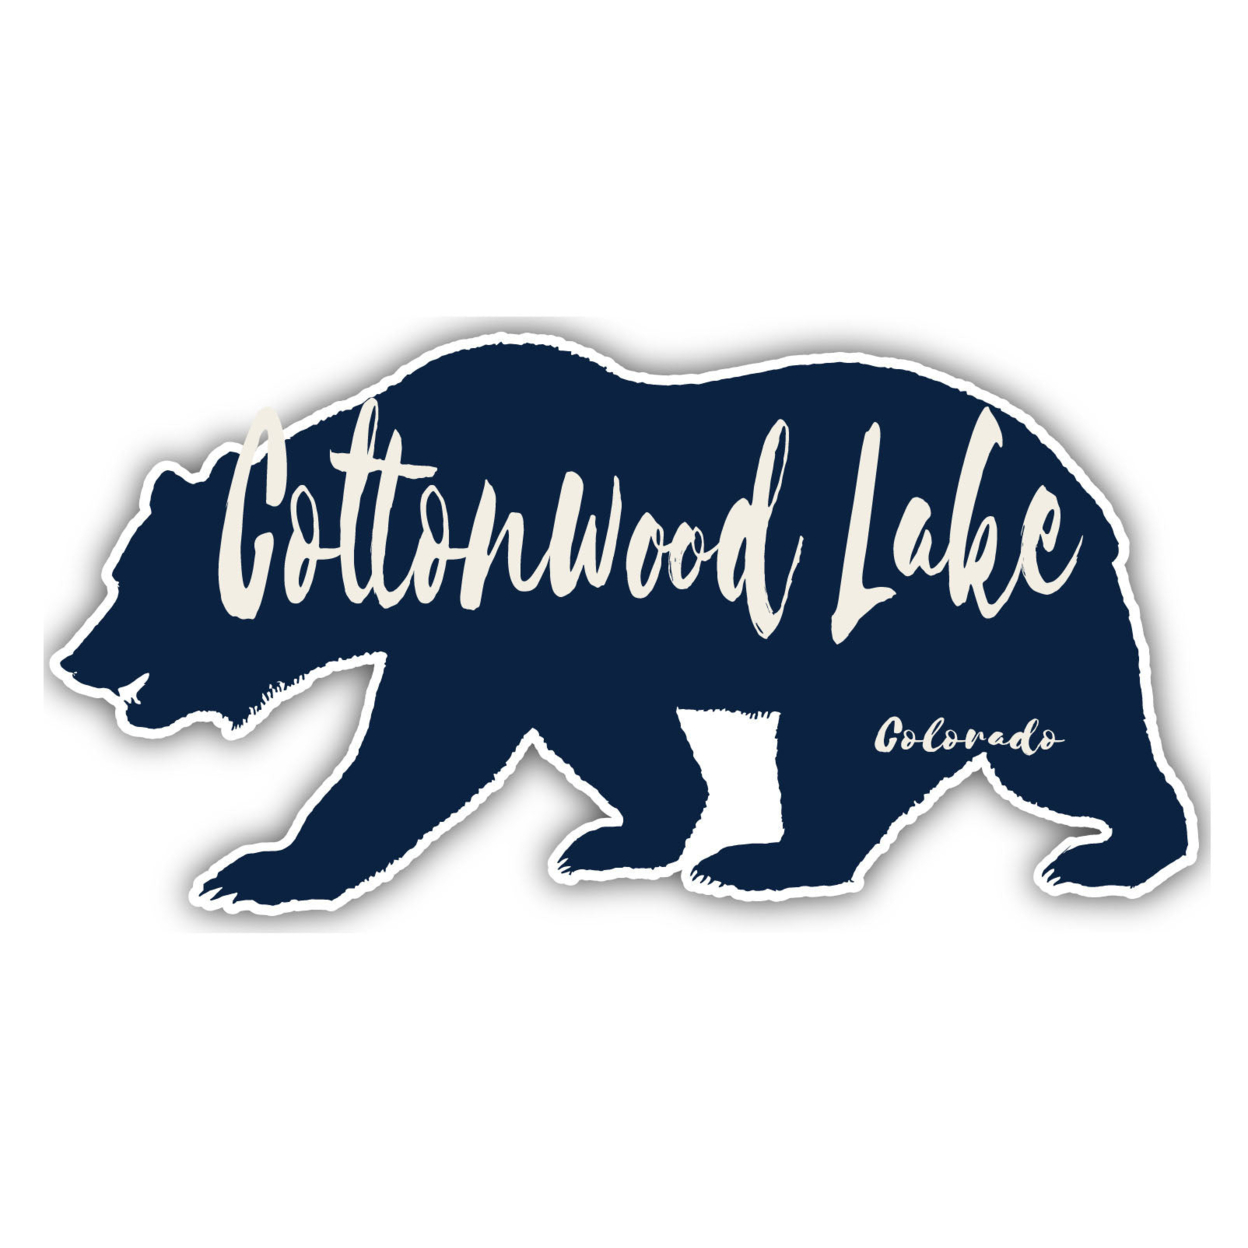 Cottonwood Lake Colorado Souvenir Decorative Stickers (Choose Theme And Size) - Single Unit, 10-Inch, Camp Life